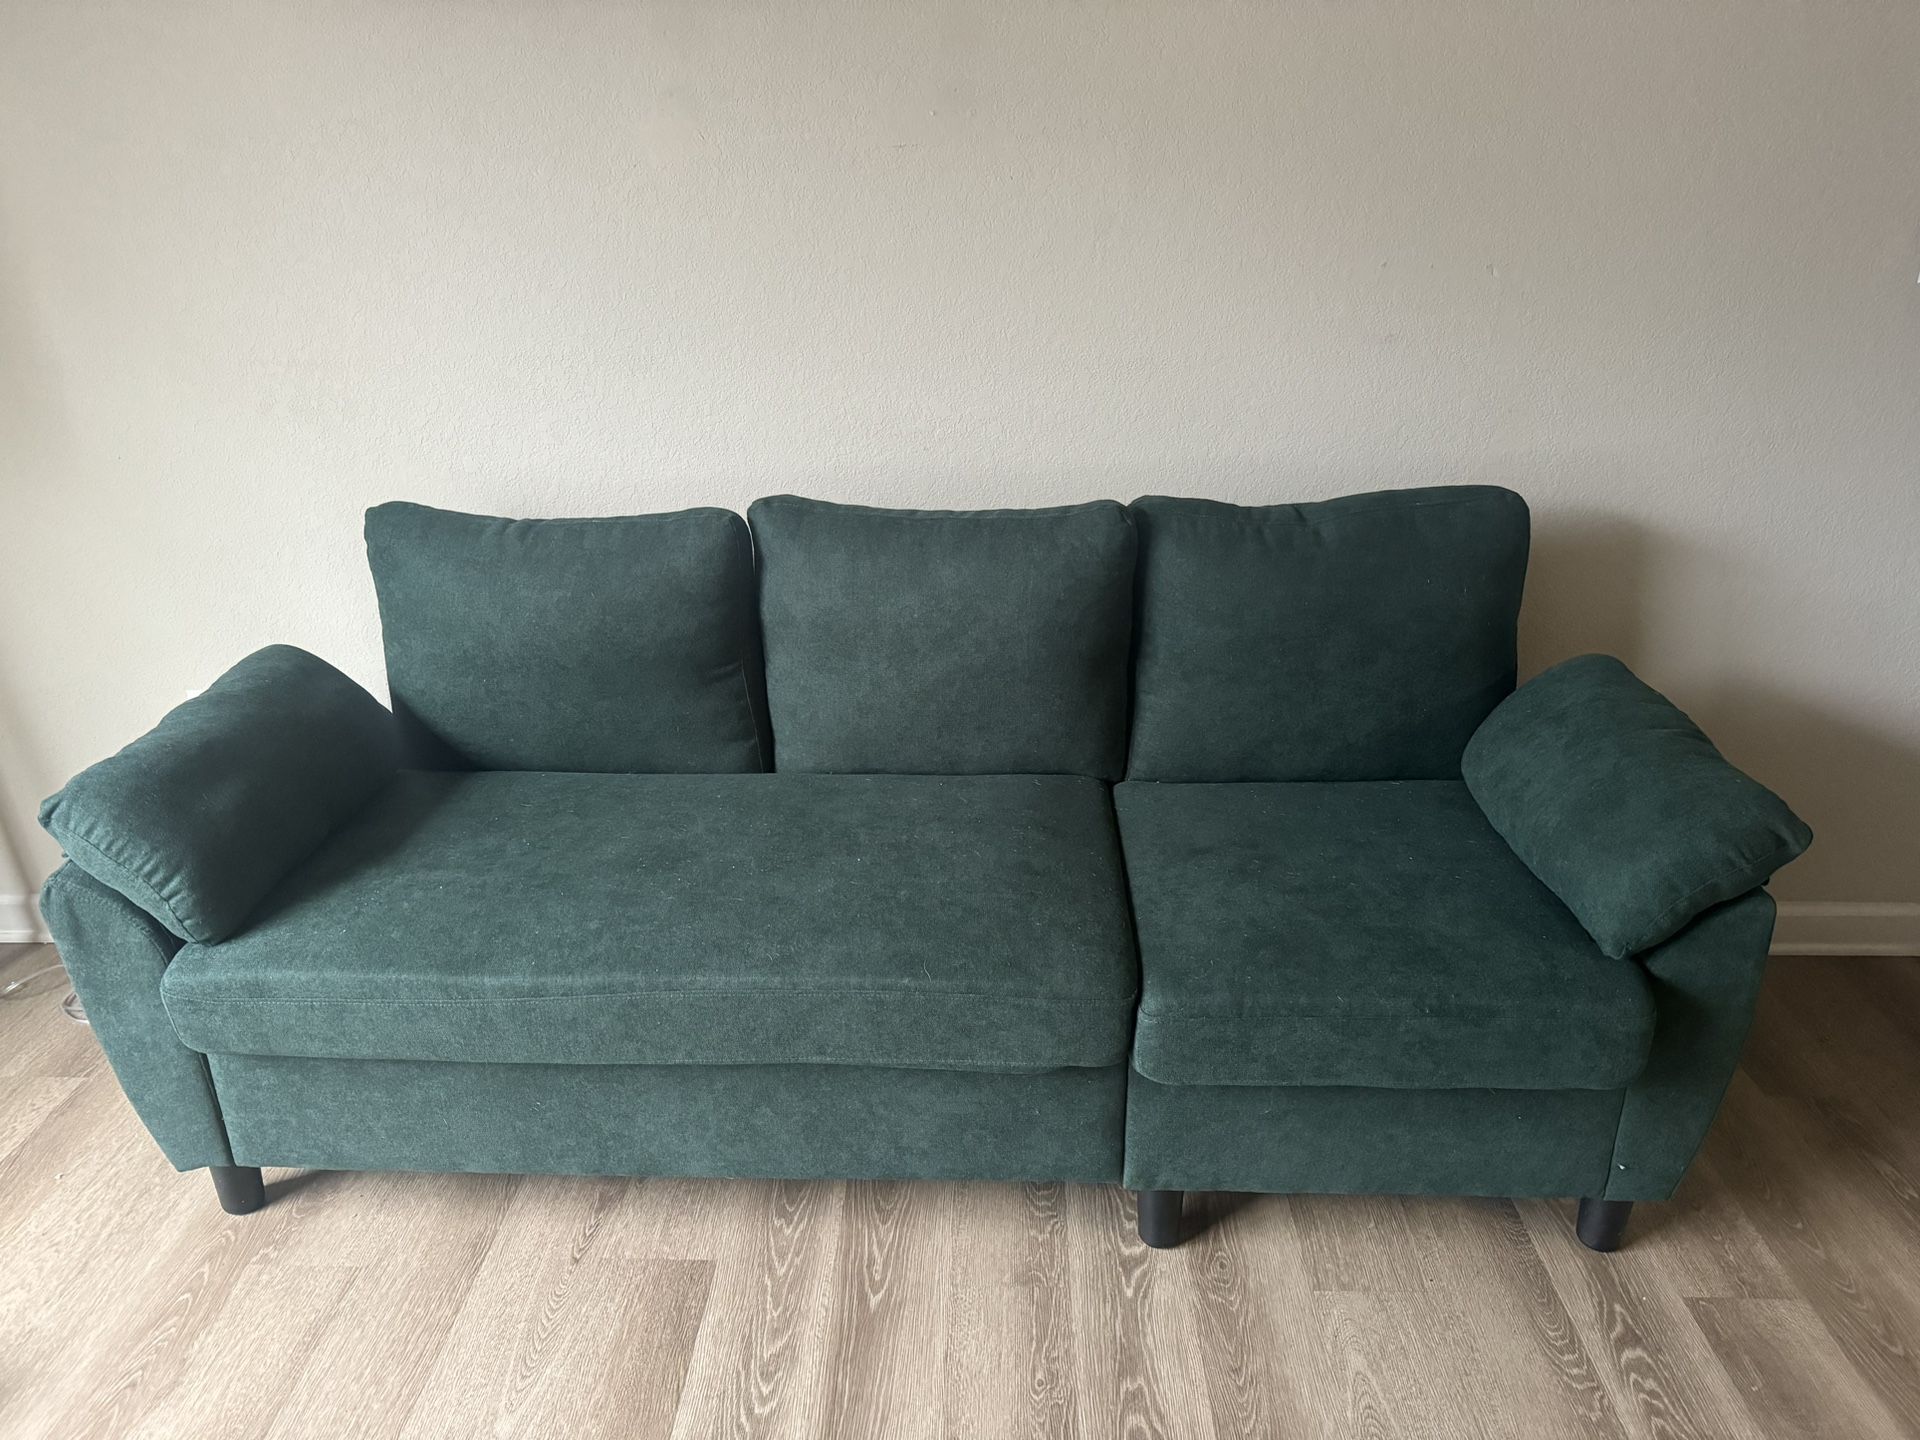 Sofa Set brand new 